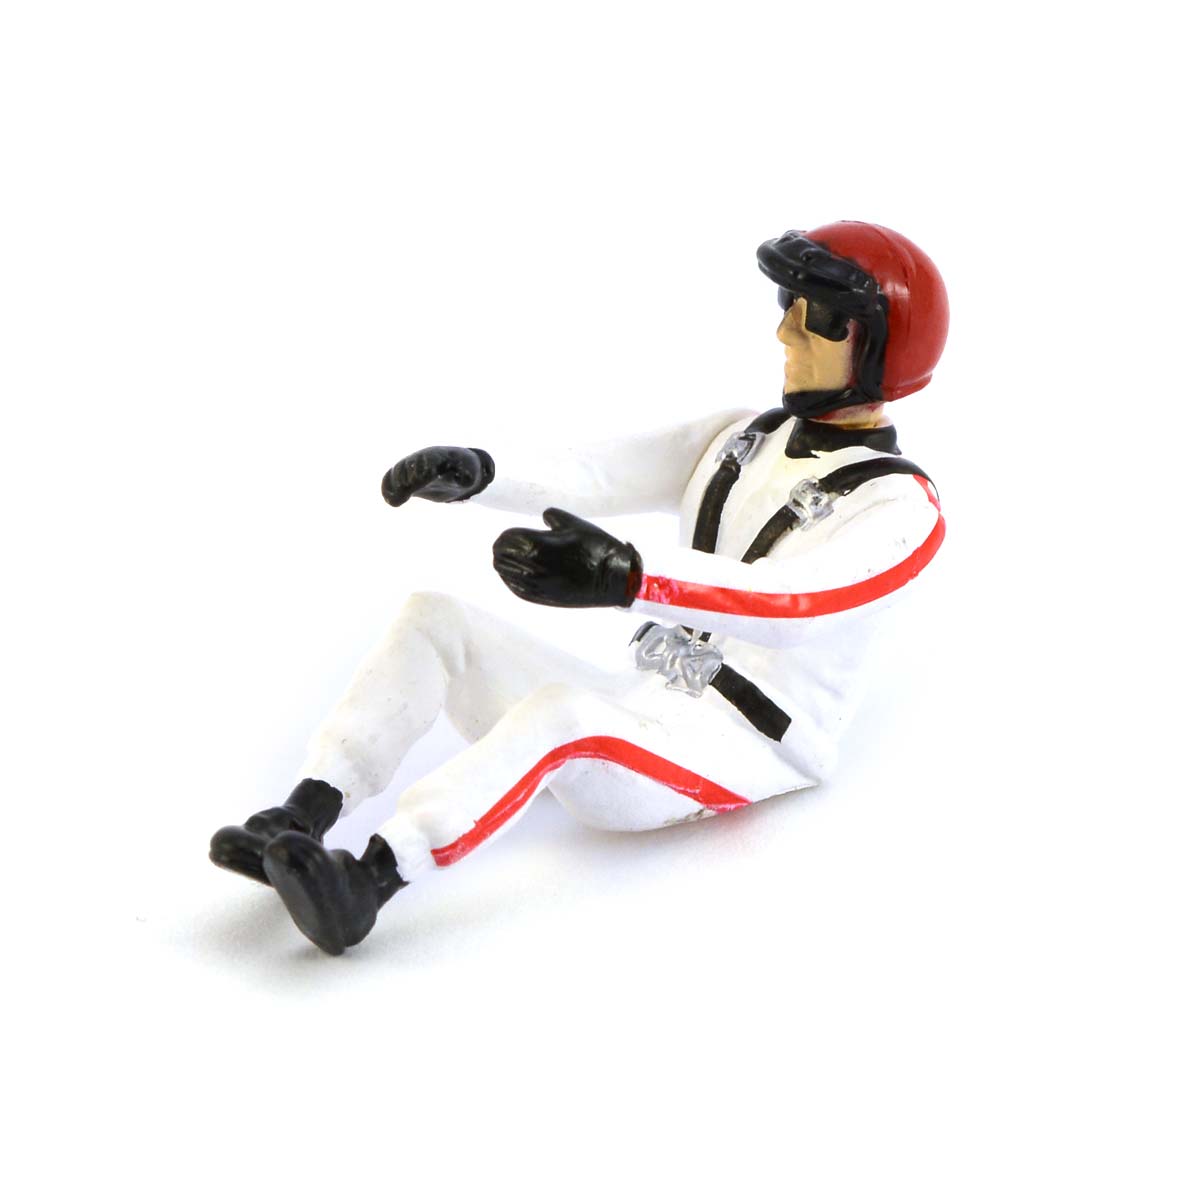 Pioneer 1/32 Slot Car Red Helmet White Suit Driver Figure FD201541 